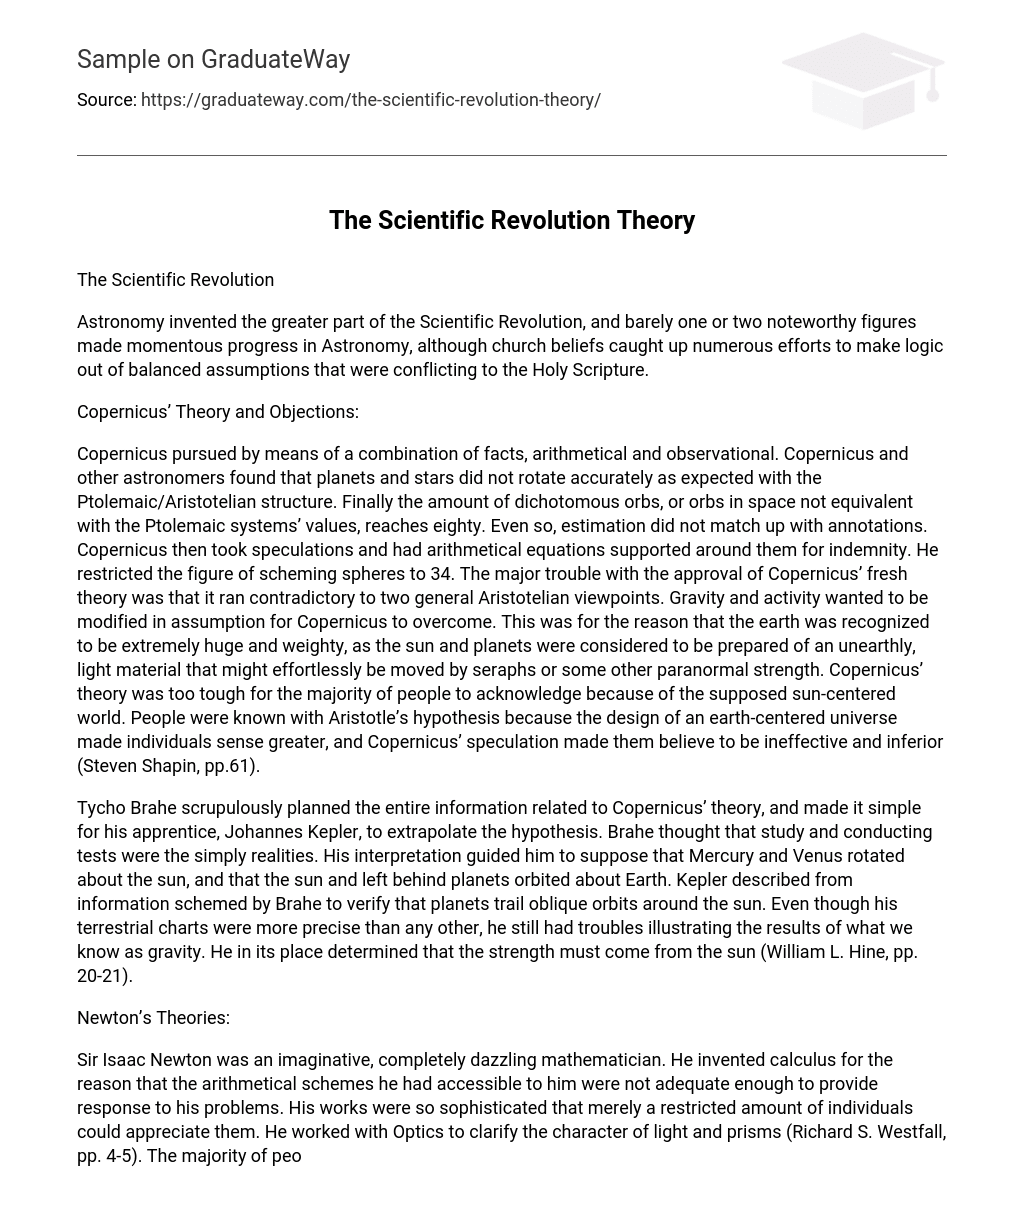 The Scientific Revolution Theory